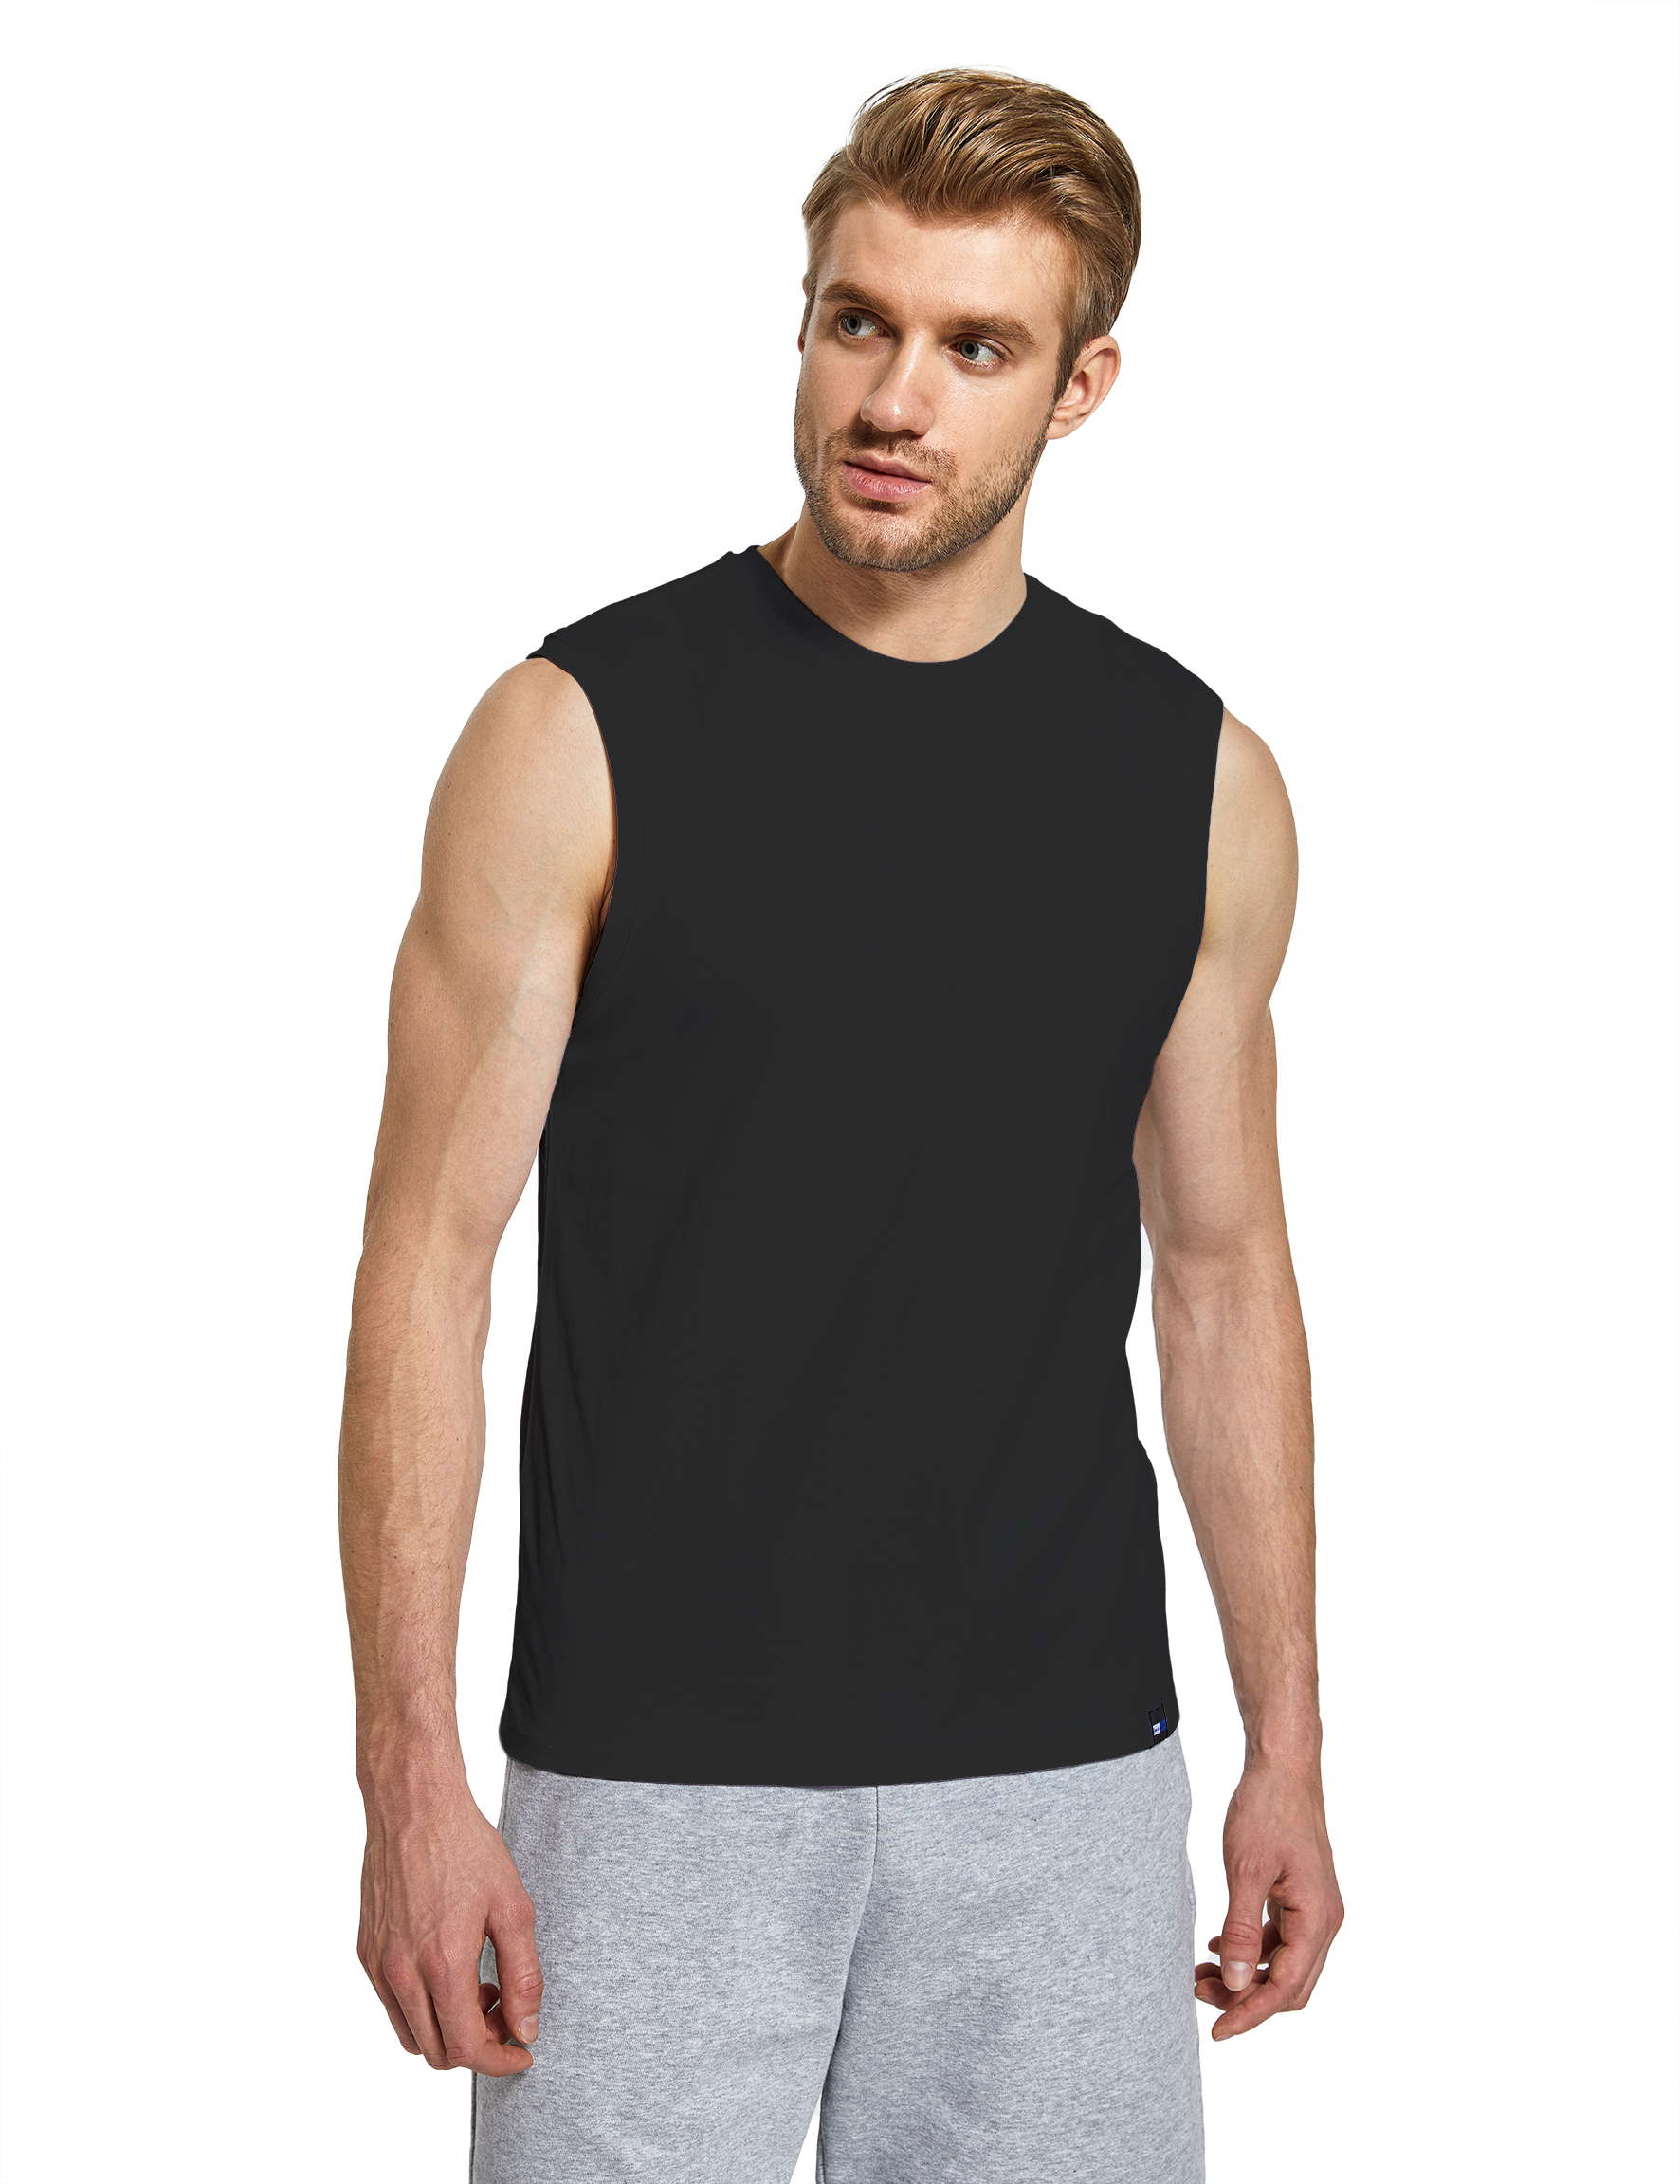 mens sleeveless shirts black